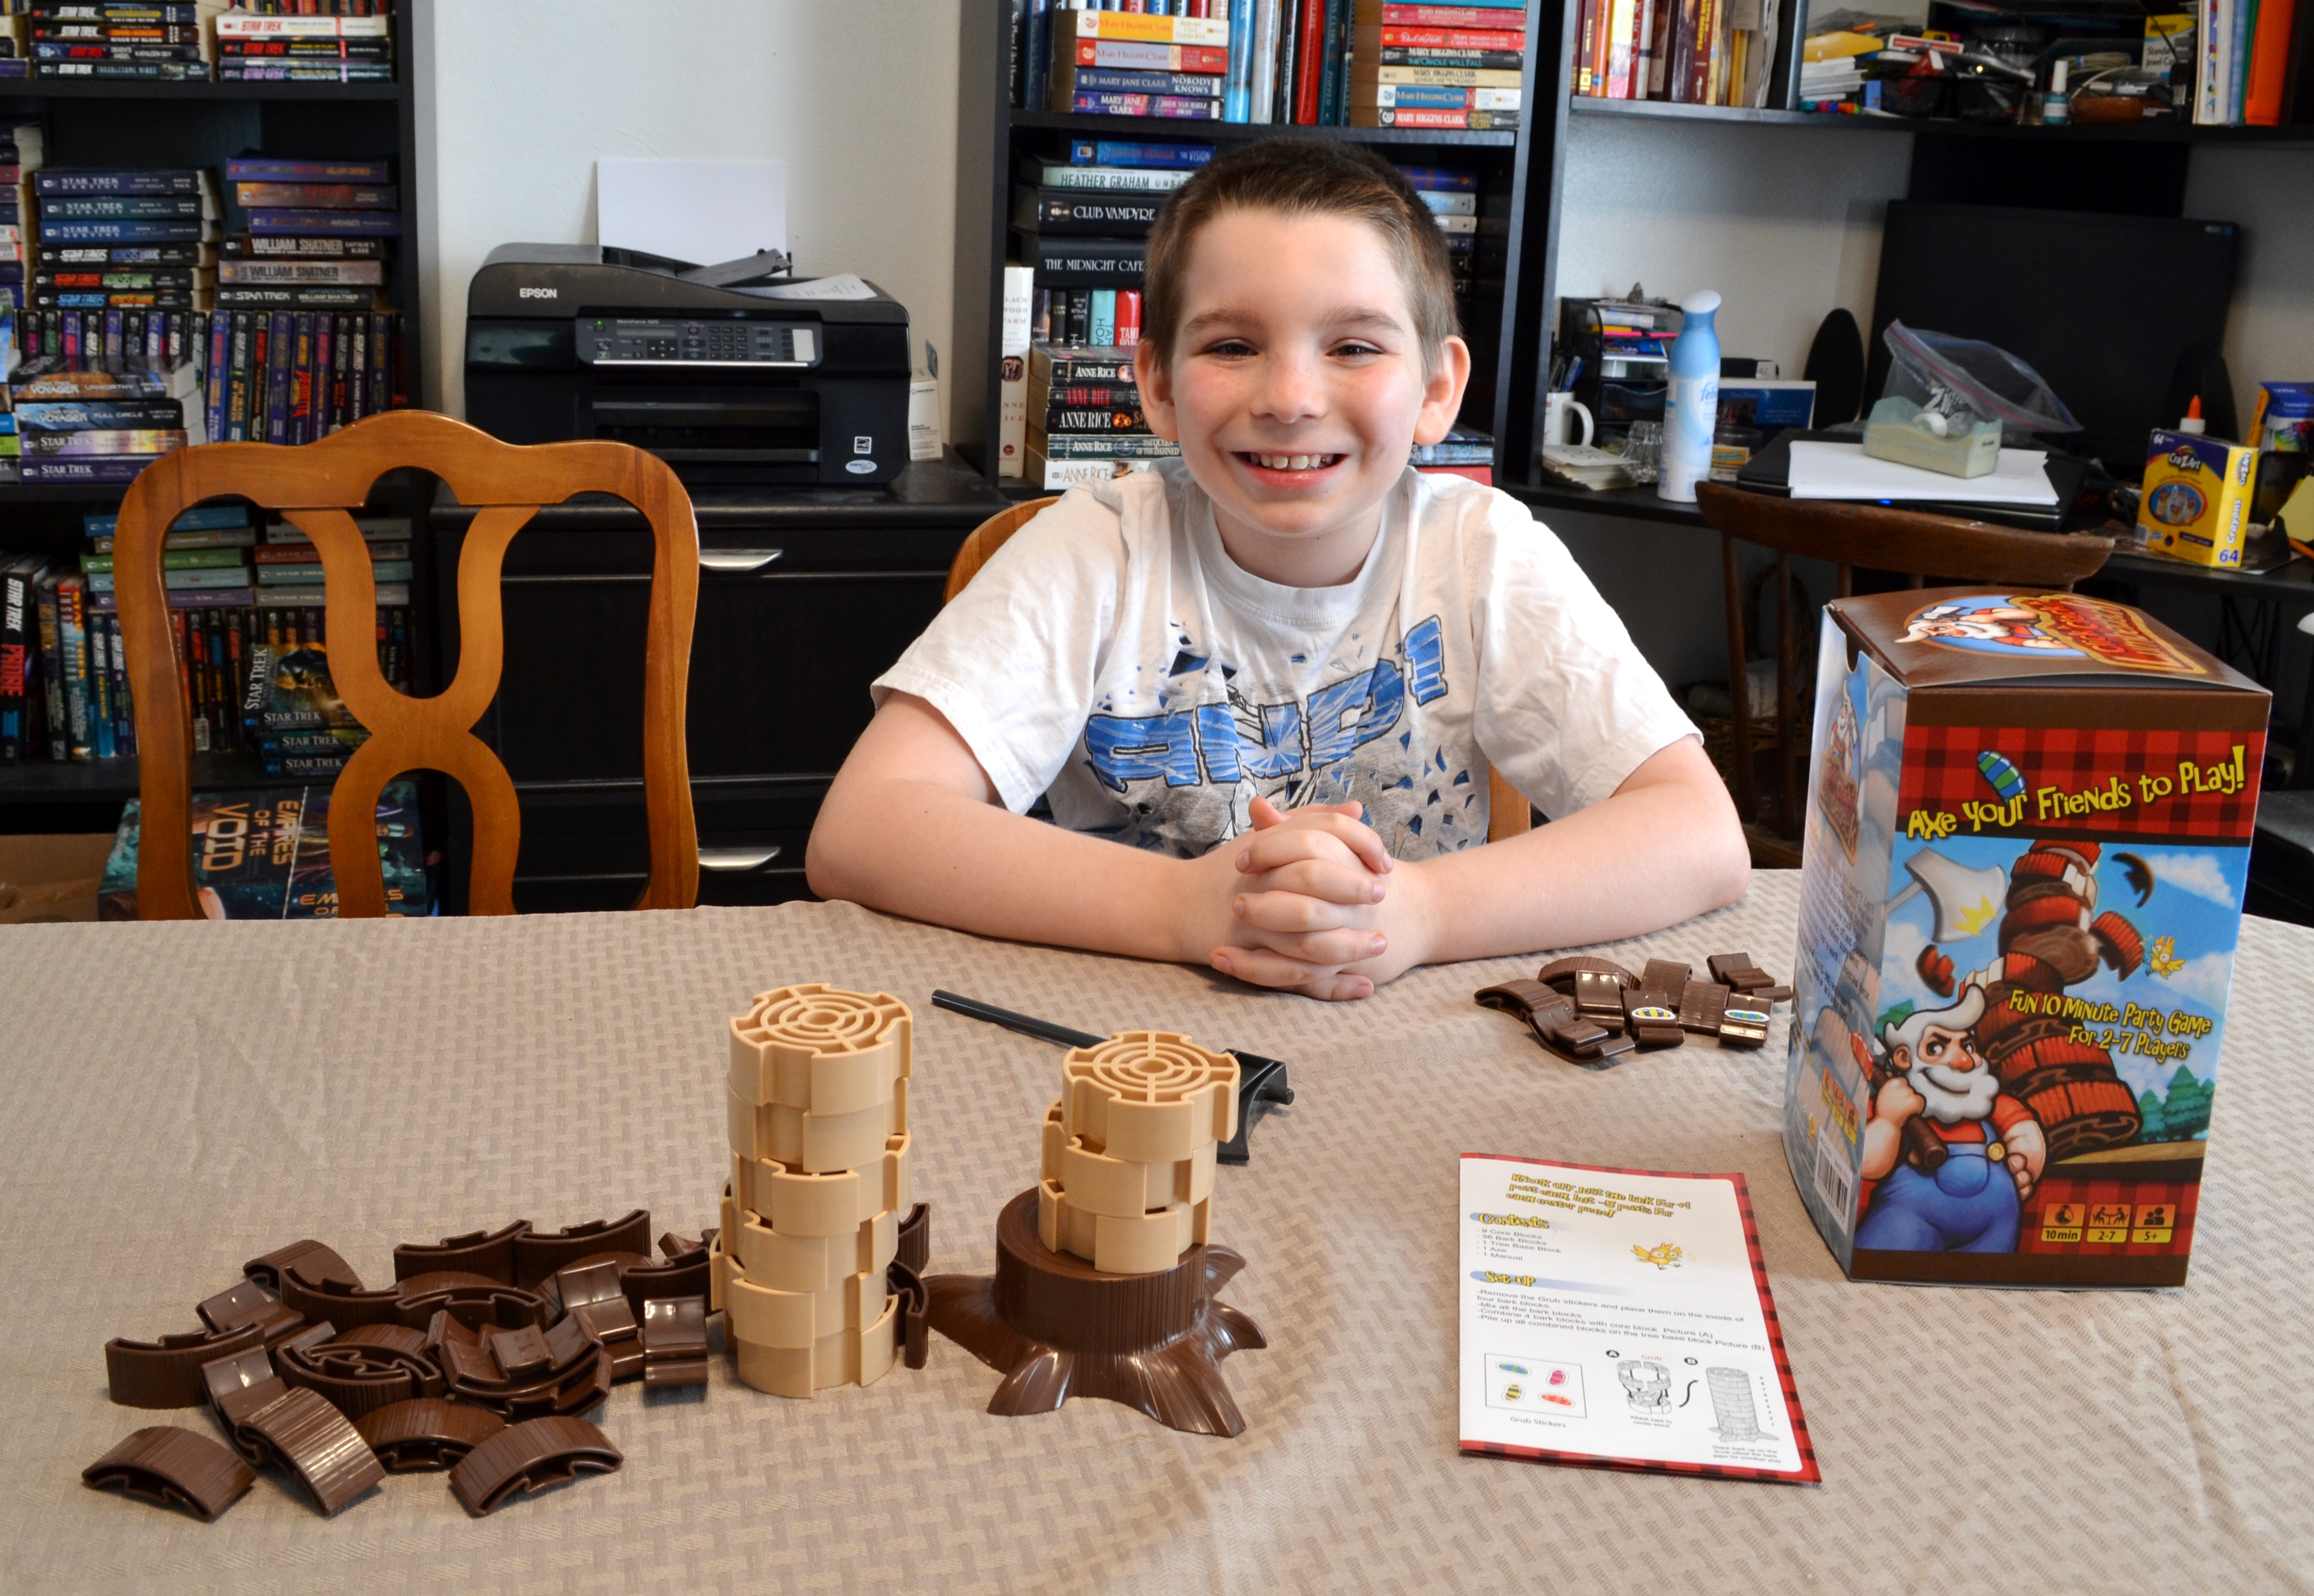 Click! Clack! Lumberjack! Axe Game (Tok Tok Woodman 2.0) by Seth Hiatt —  Kickstarter